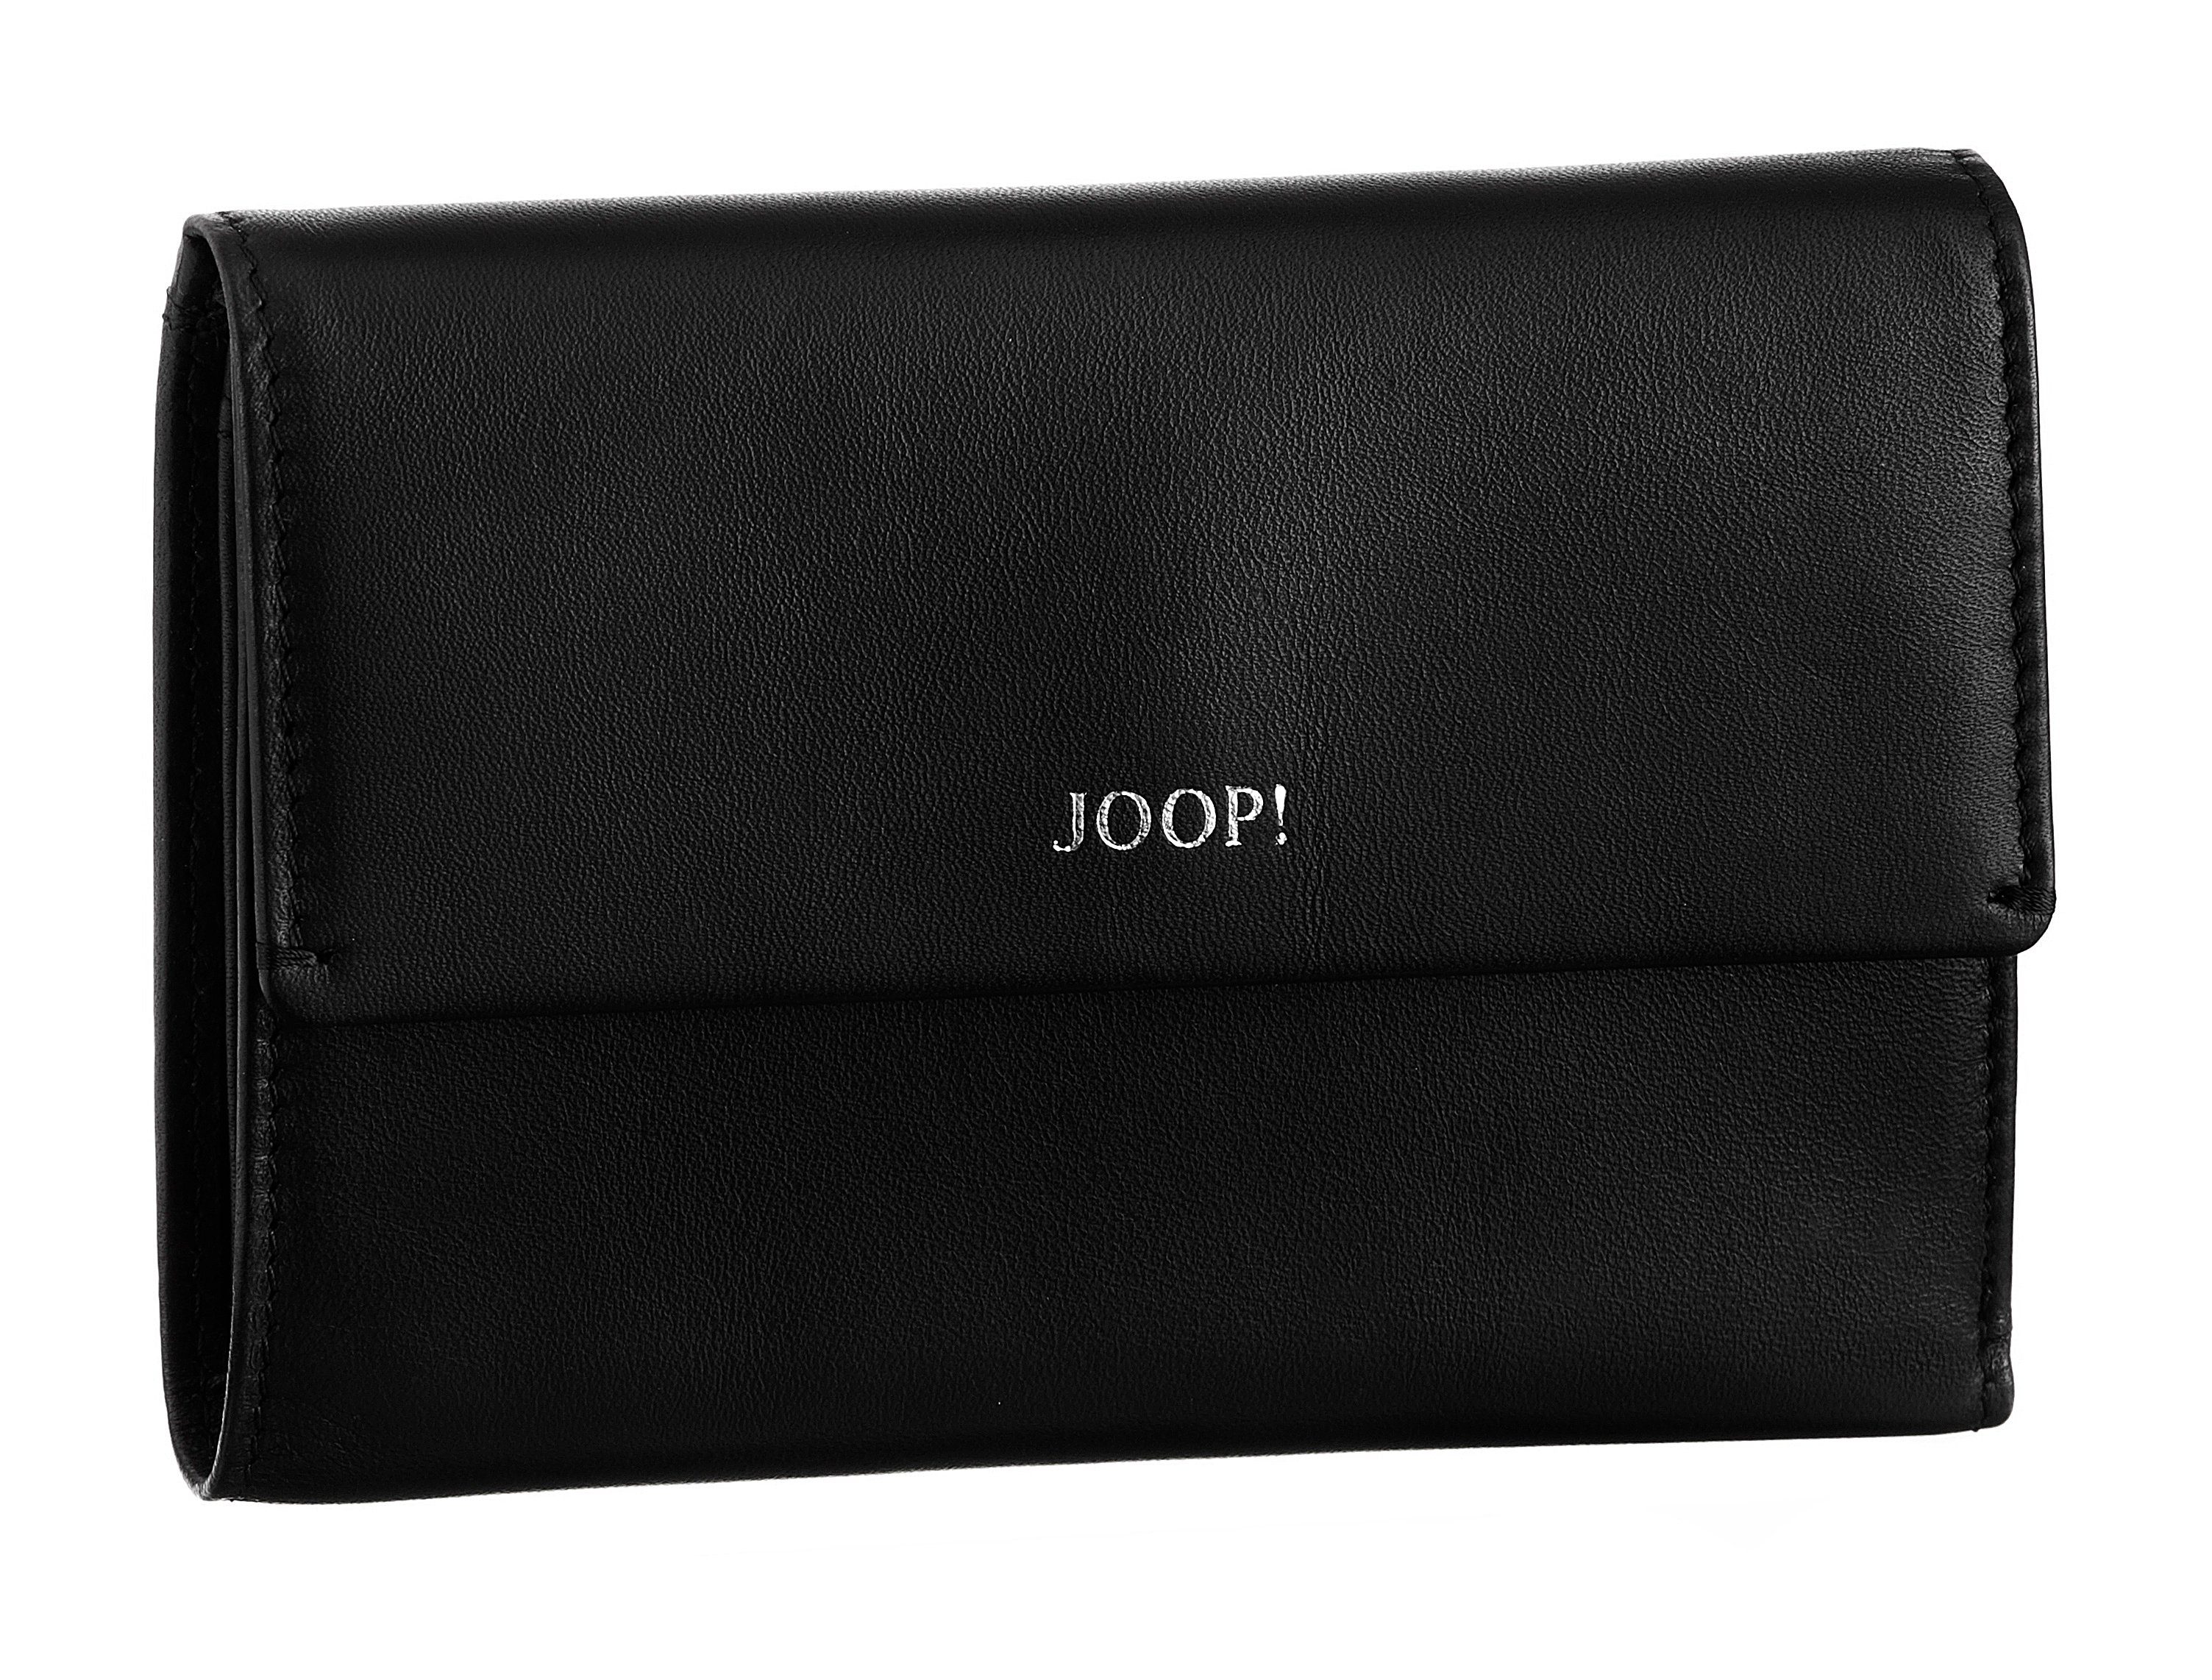 Joop! Geldbörse sofisticato 1.0 cosma black Design mh10f, schlichtem in purse